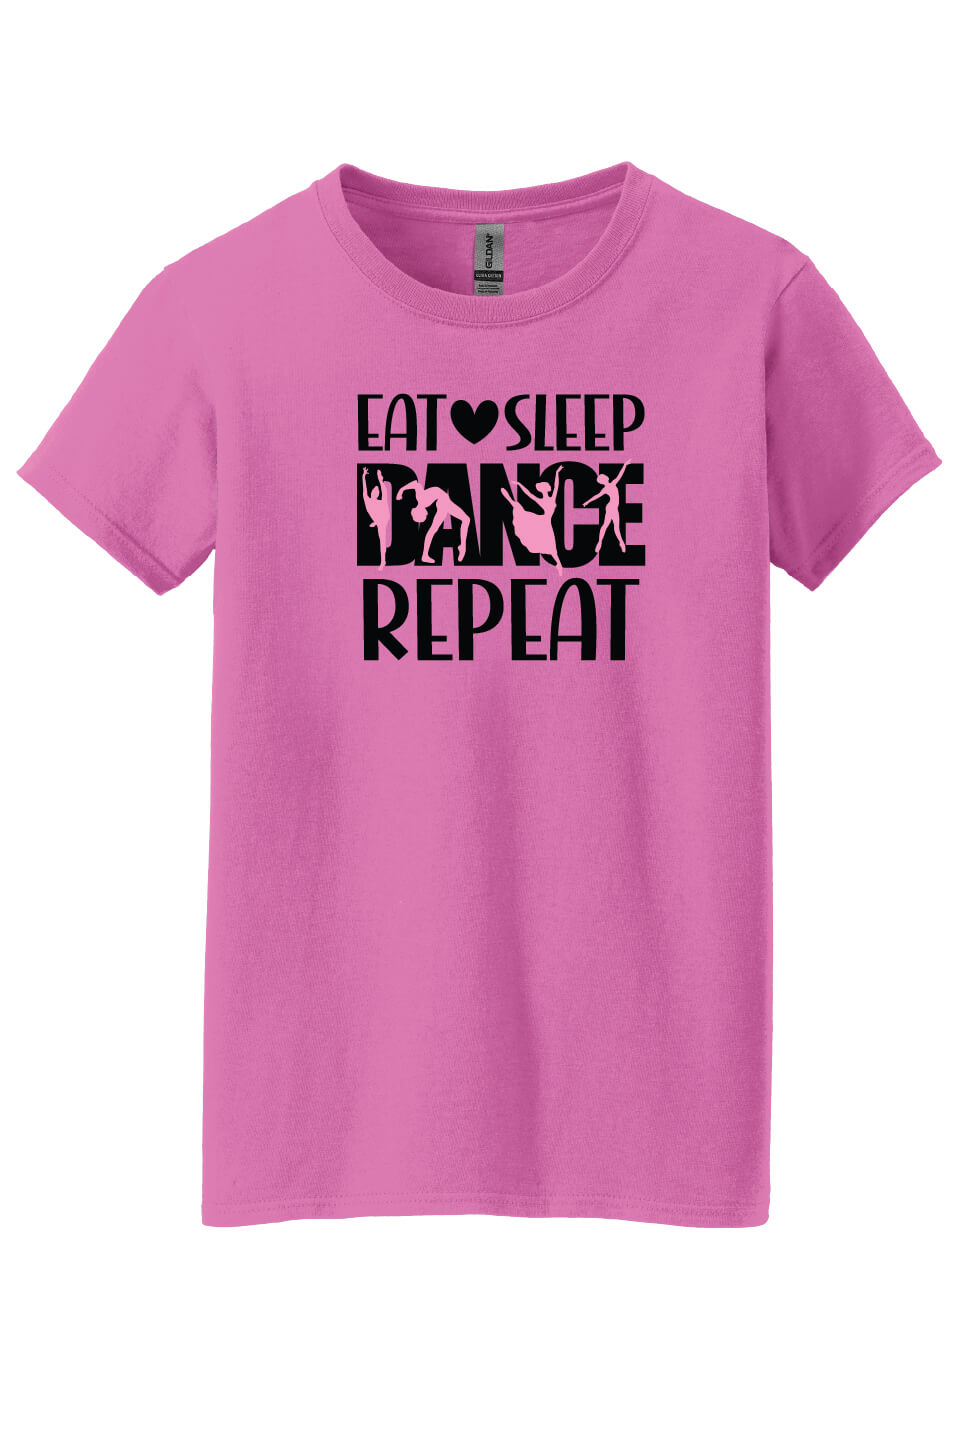 Eat Sleep Dance Repeat Short Sleeve T-Shirt (Ladies) pink